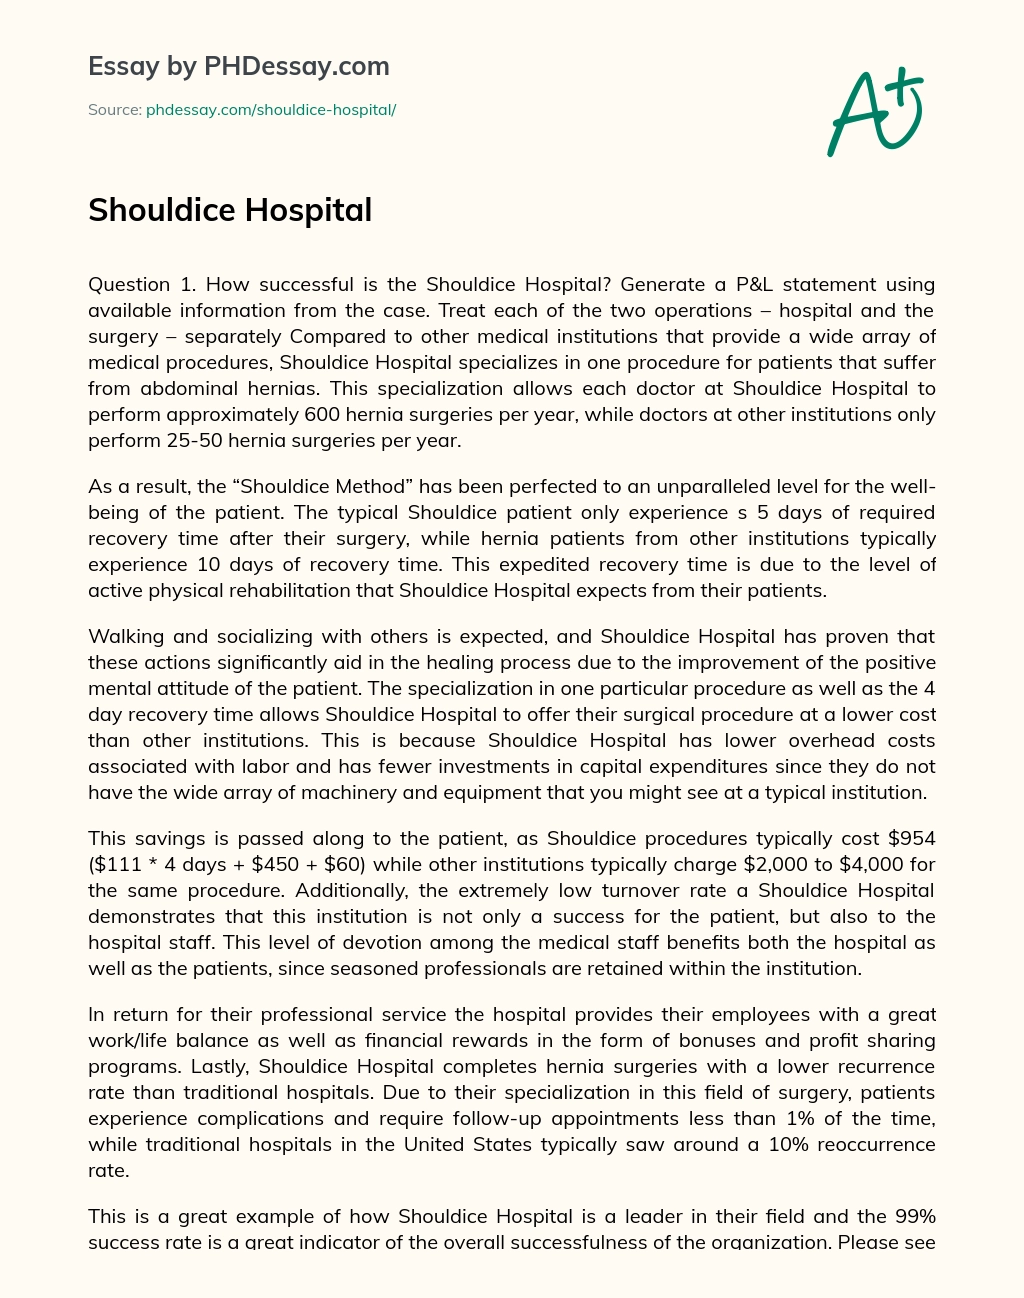 Shouldice Hospital essay